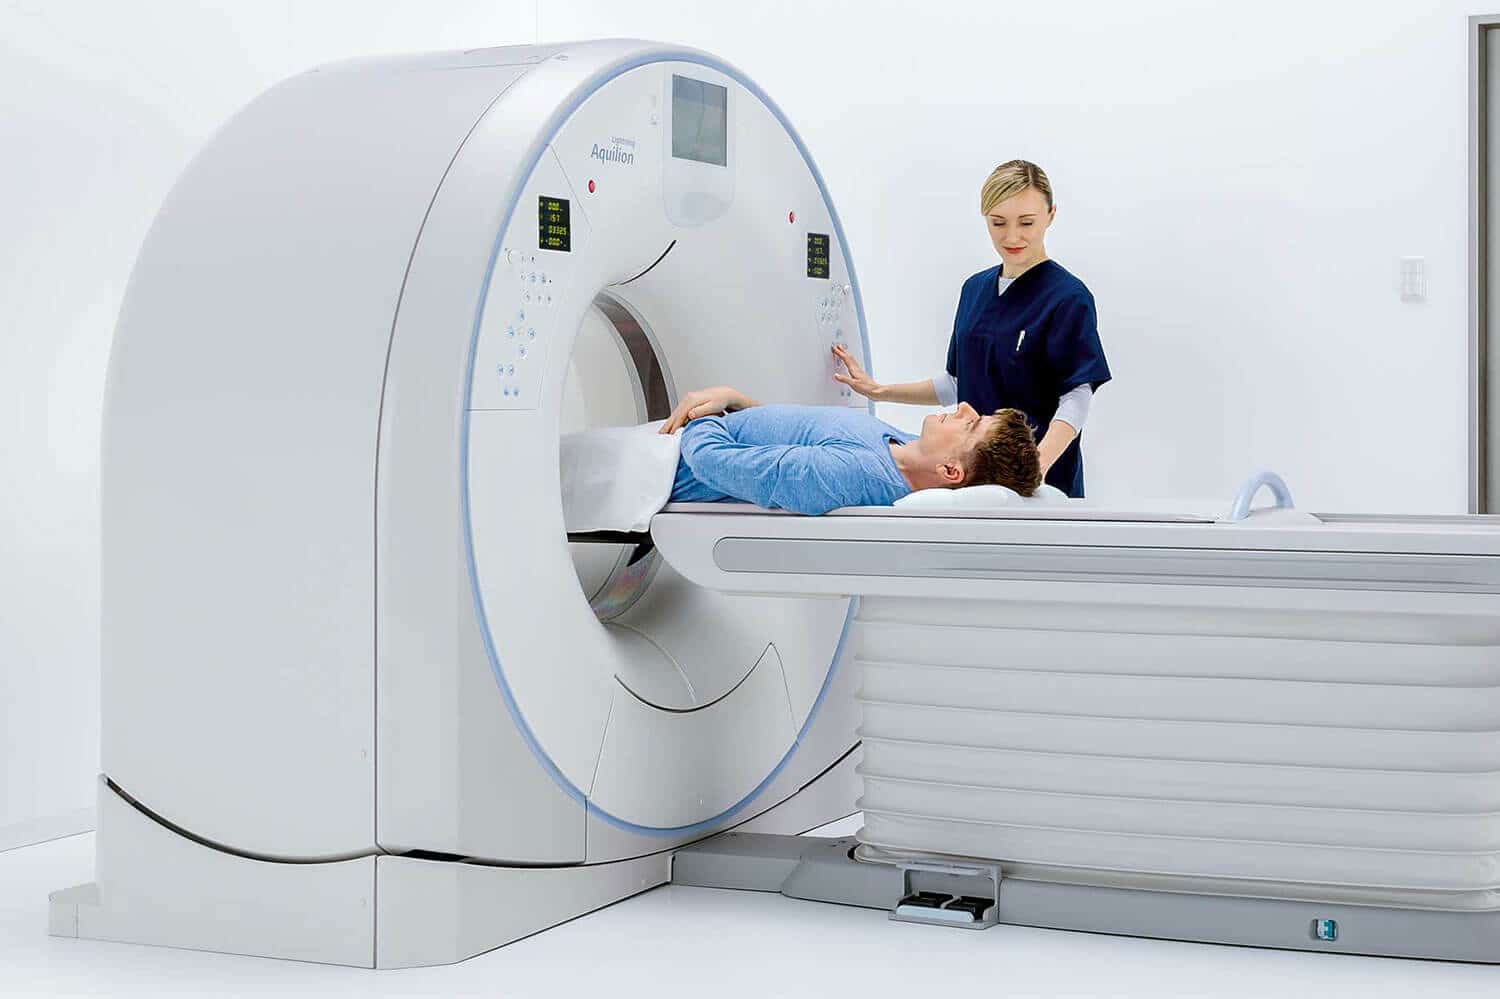 tomografia helicoidal